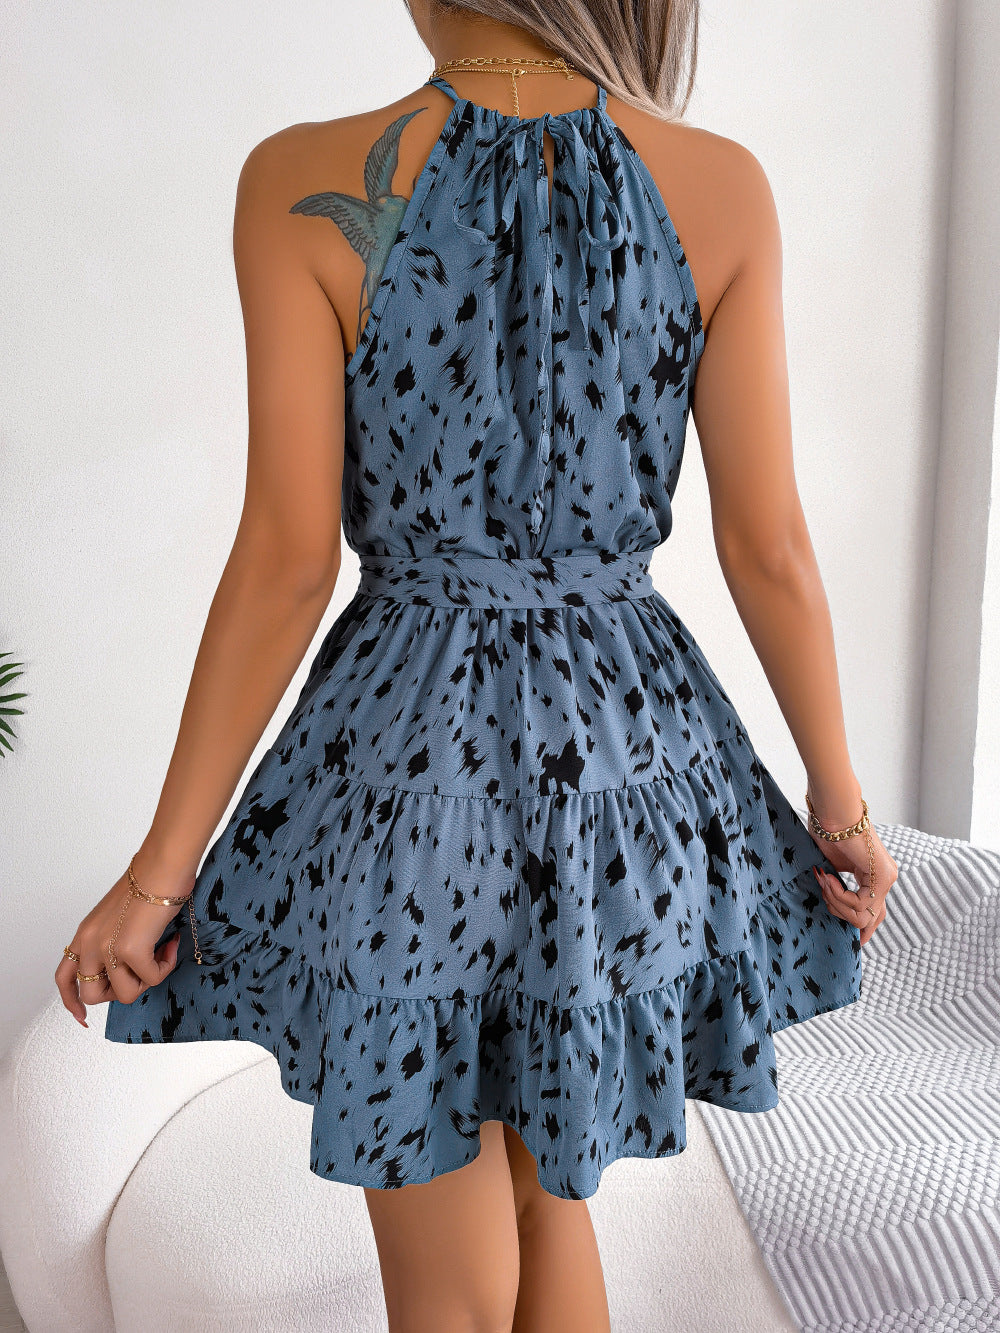 Casual Leopard Print Ruffled Swing Dress Summer Fashion Beach Dresses Women - HJG